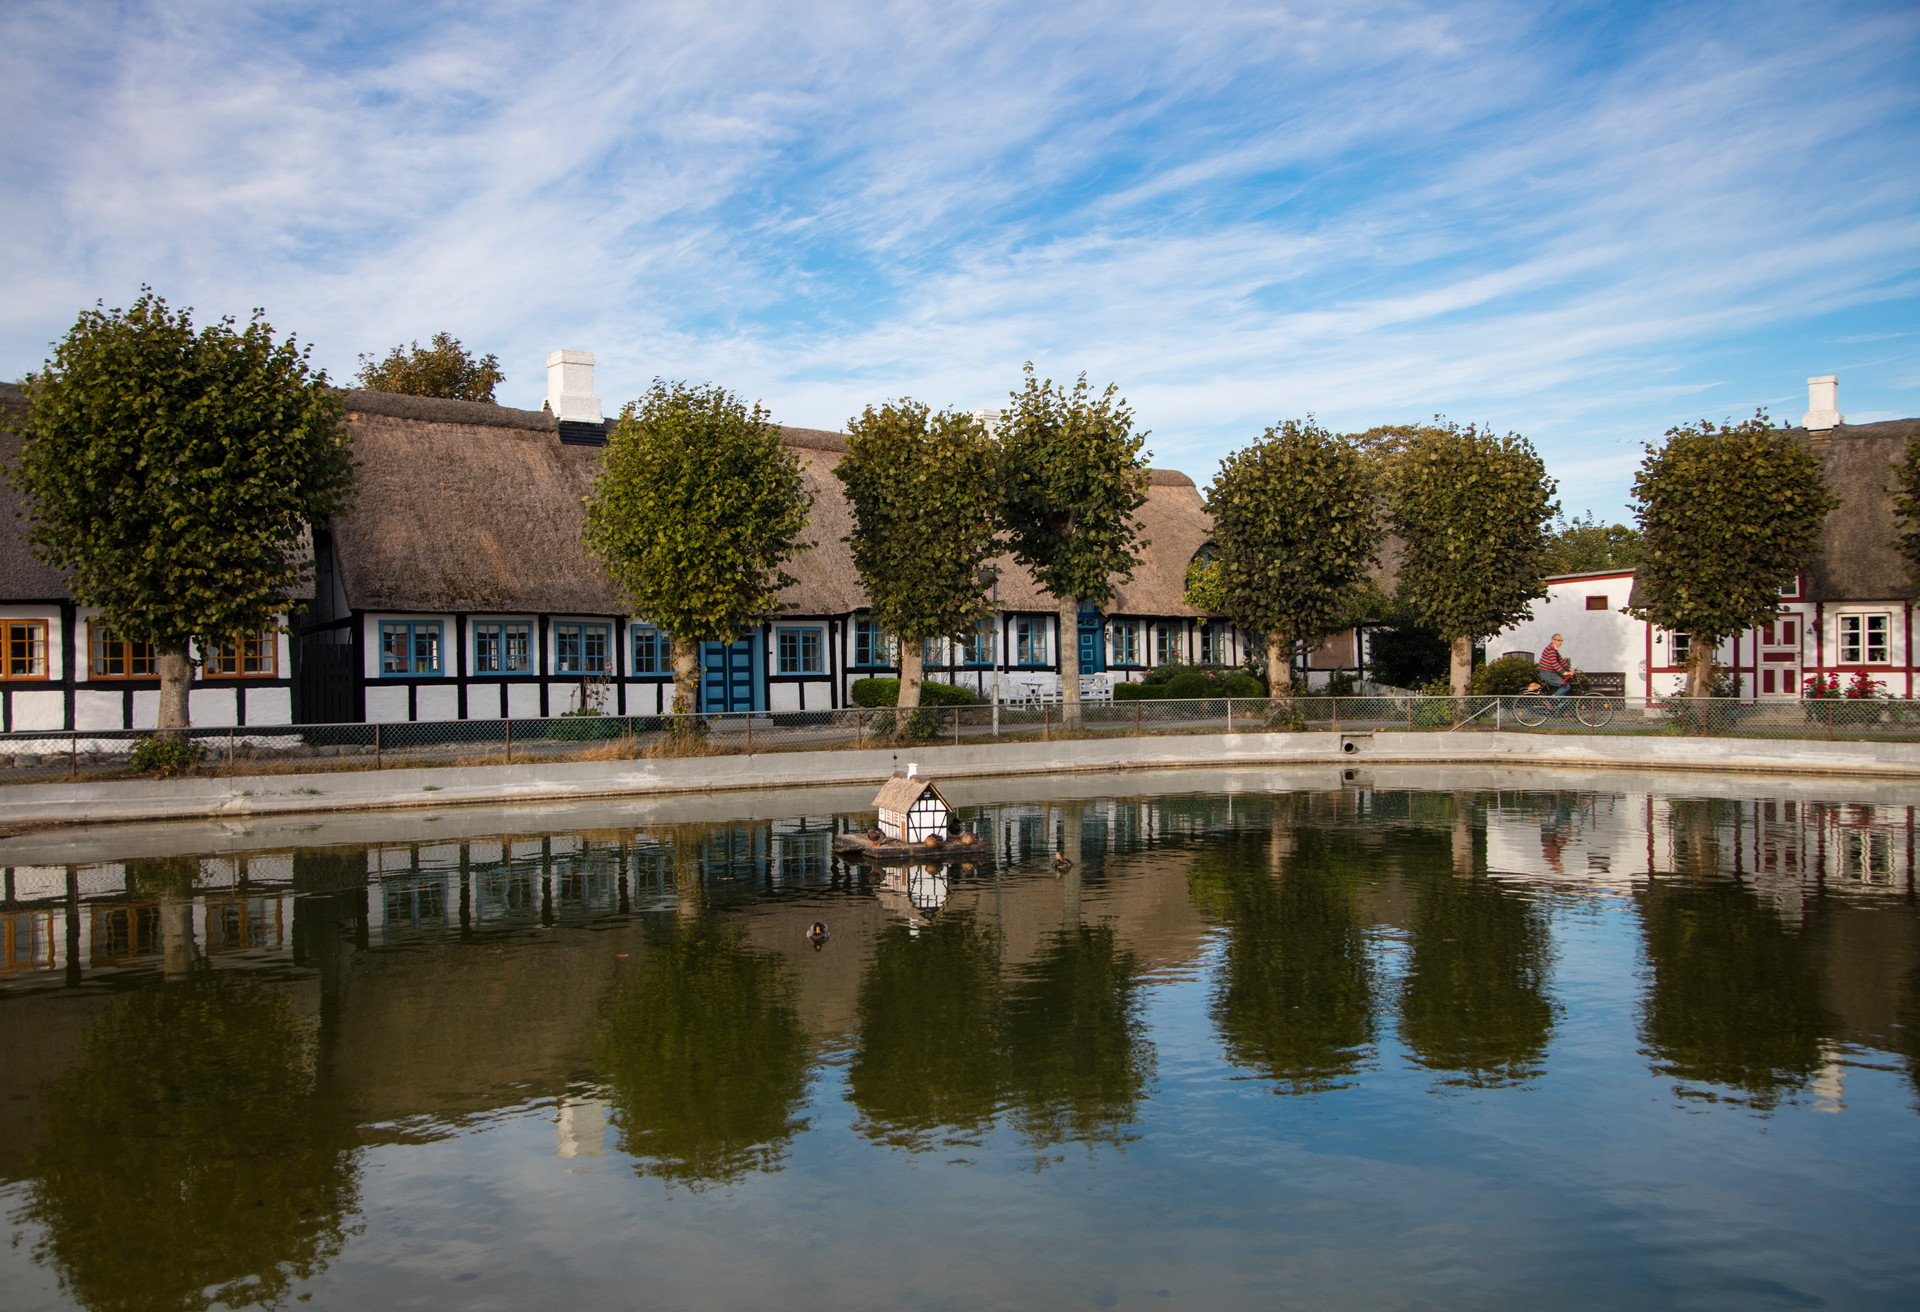 Reflection of half-timbered houses in pond, Nordby, Samsø (Samsoe), Denmark